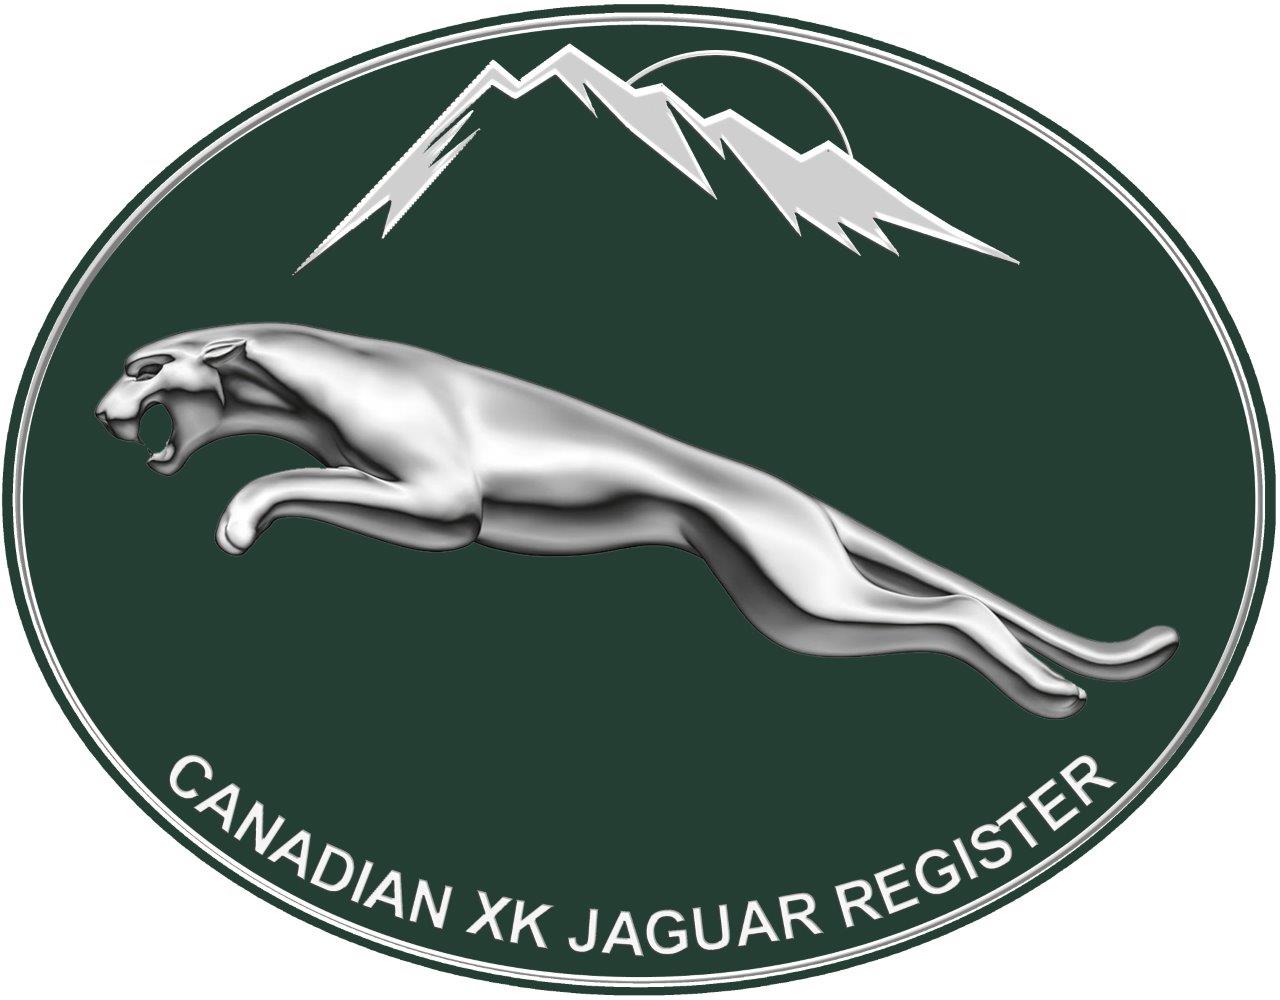 Canadian XK Jaguar Register